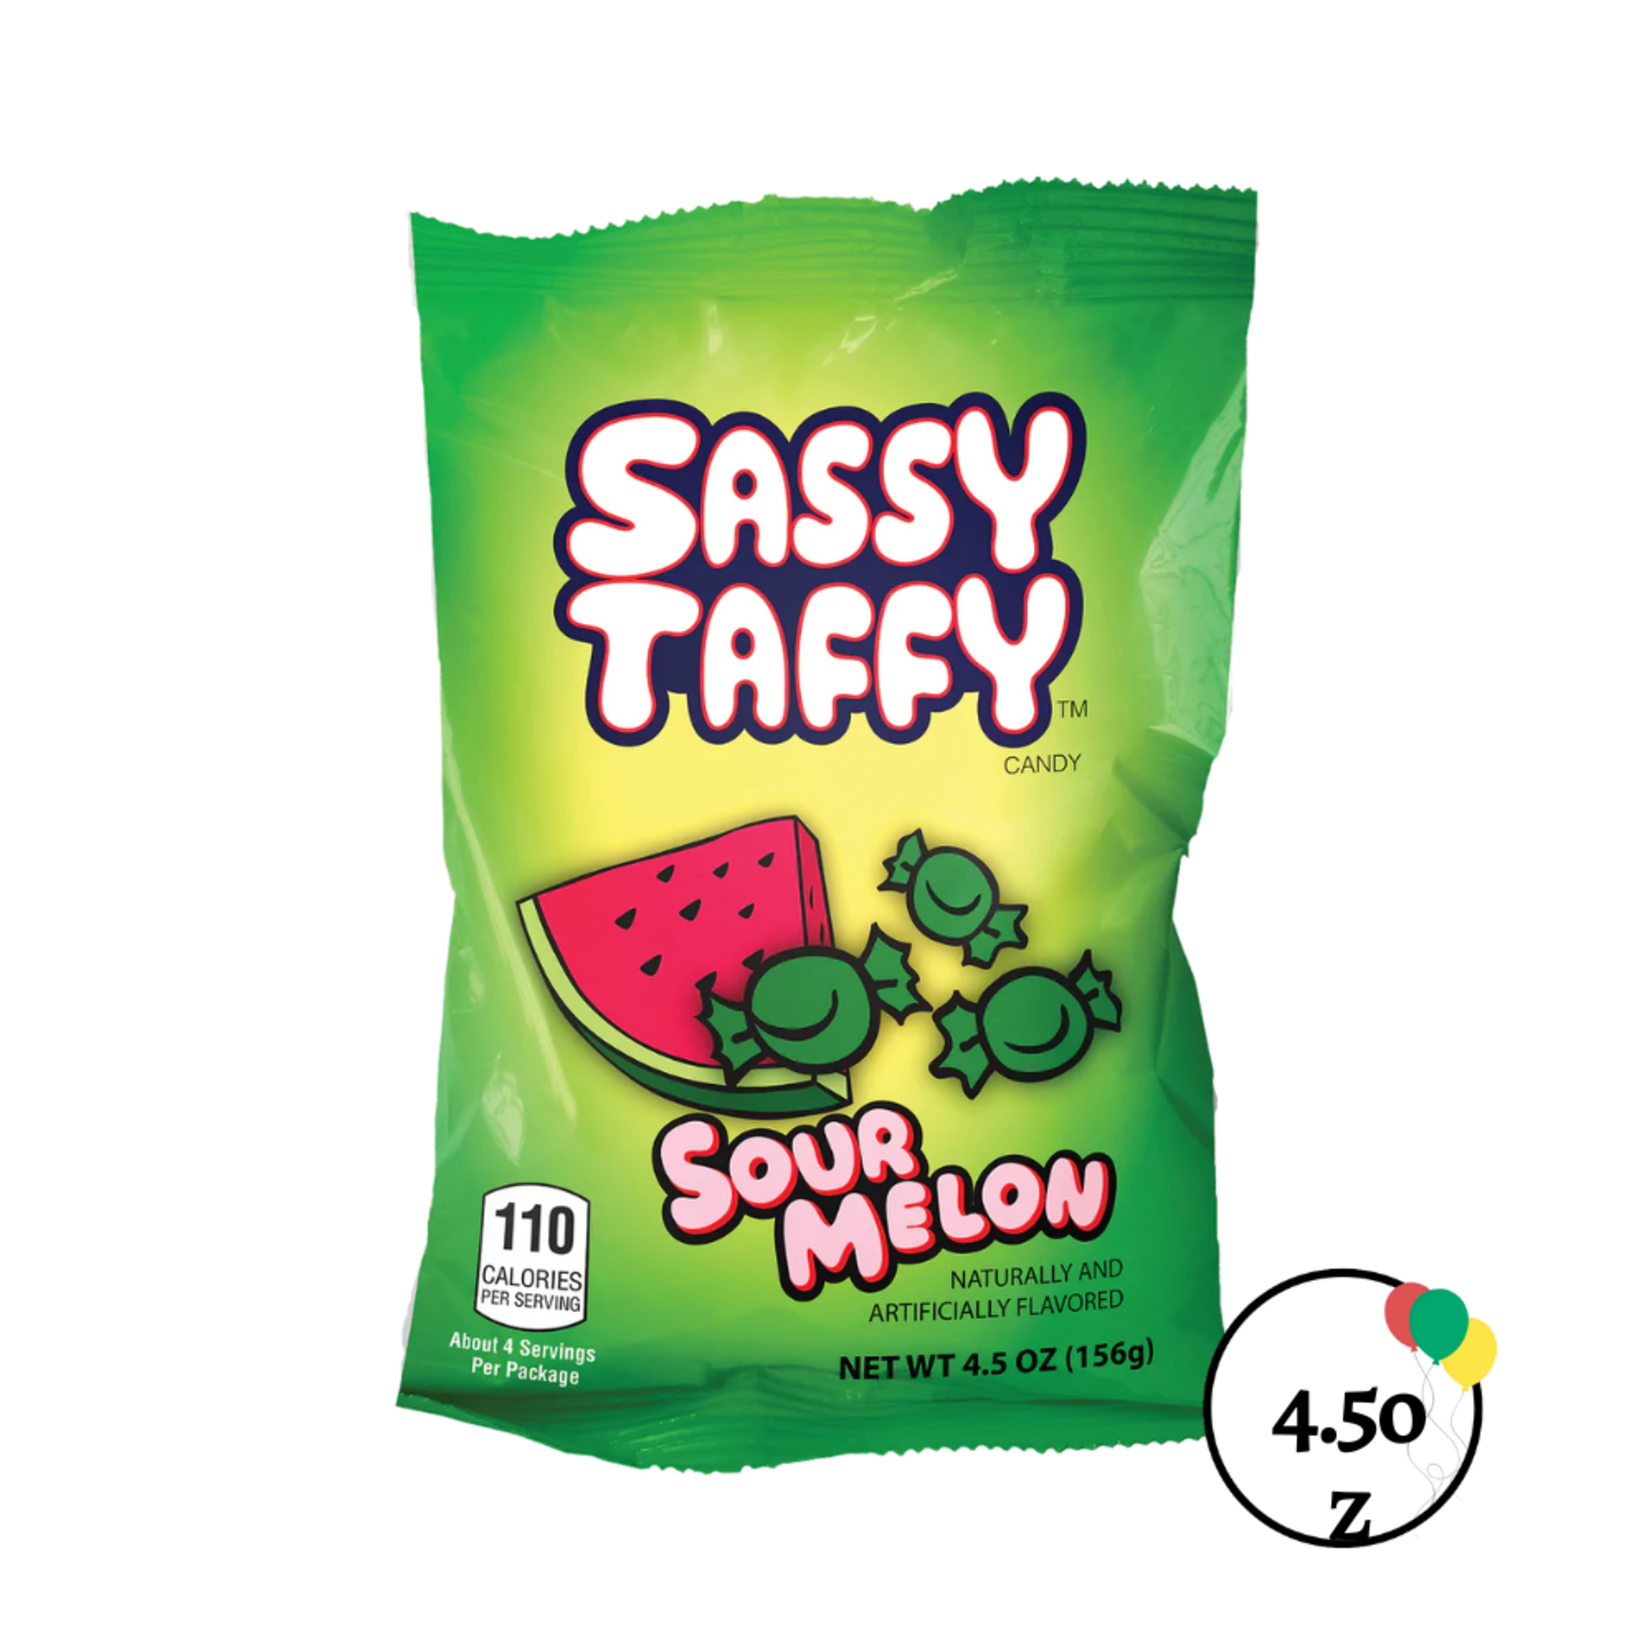 Sassy Taffy Sour Melon